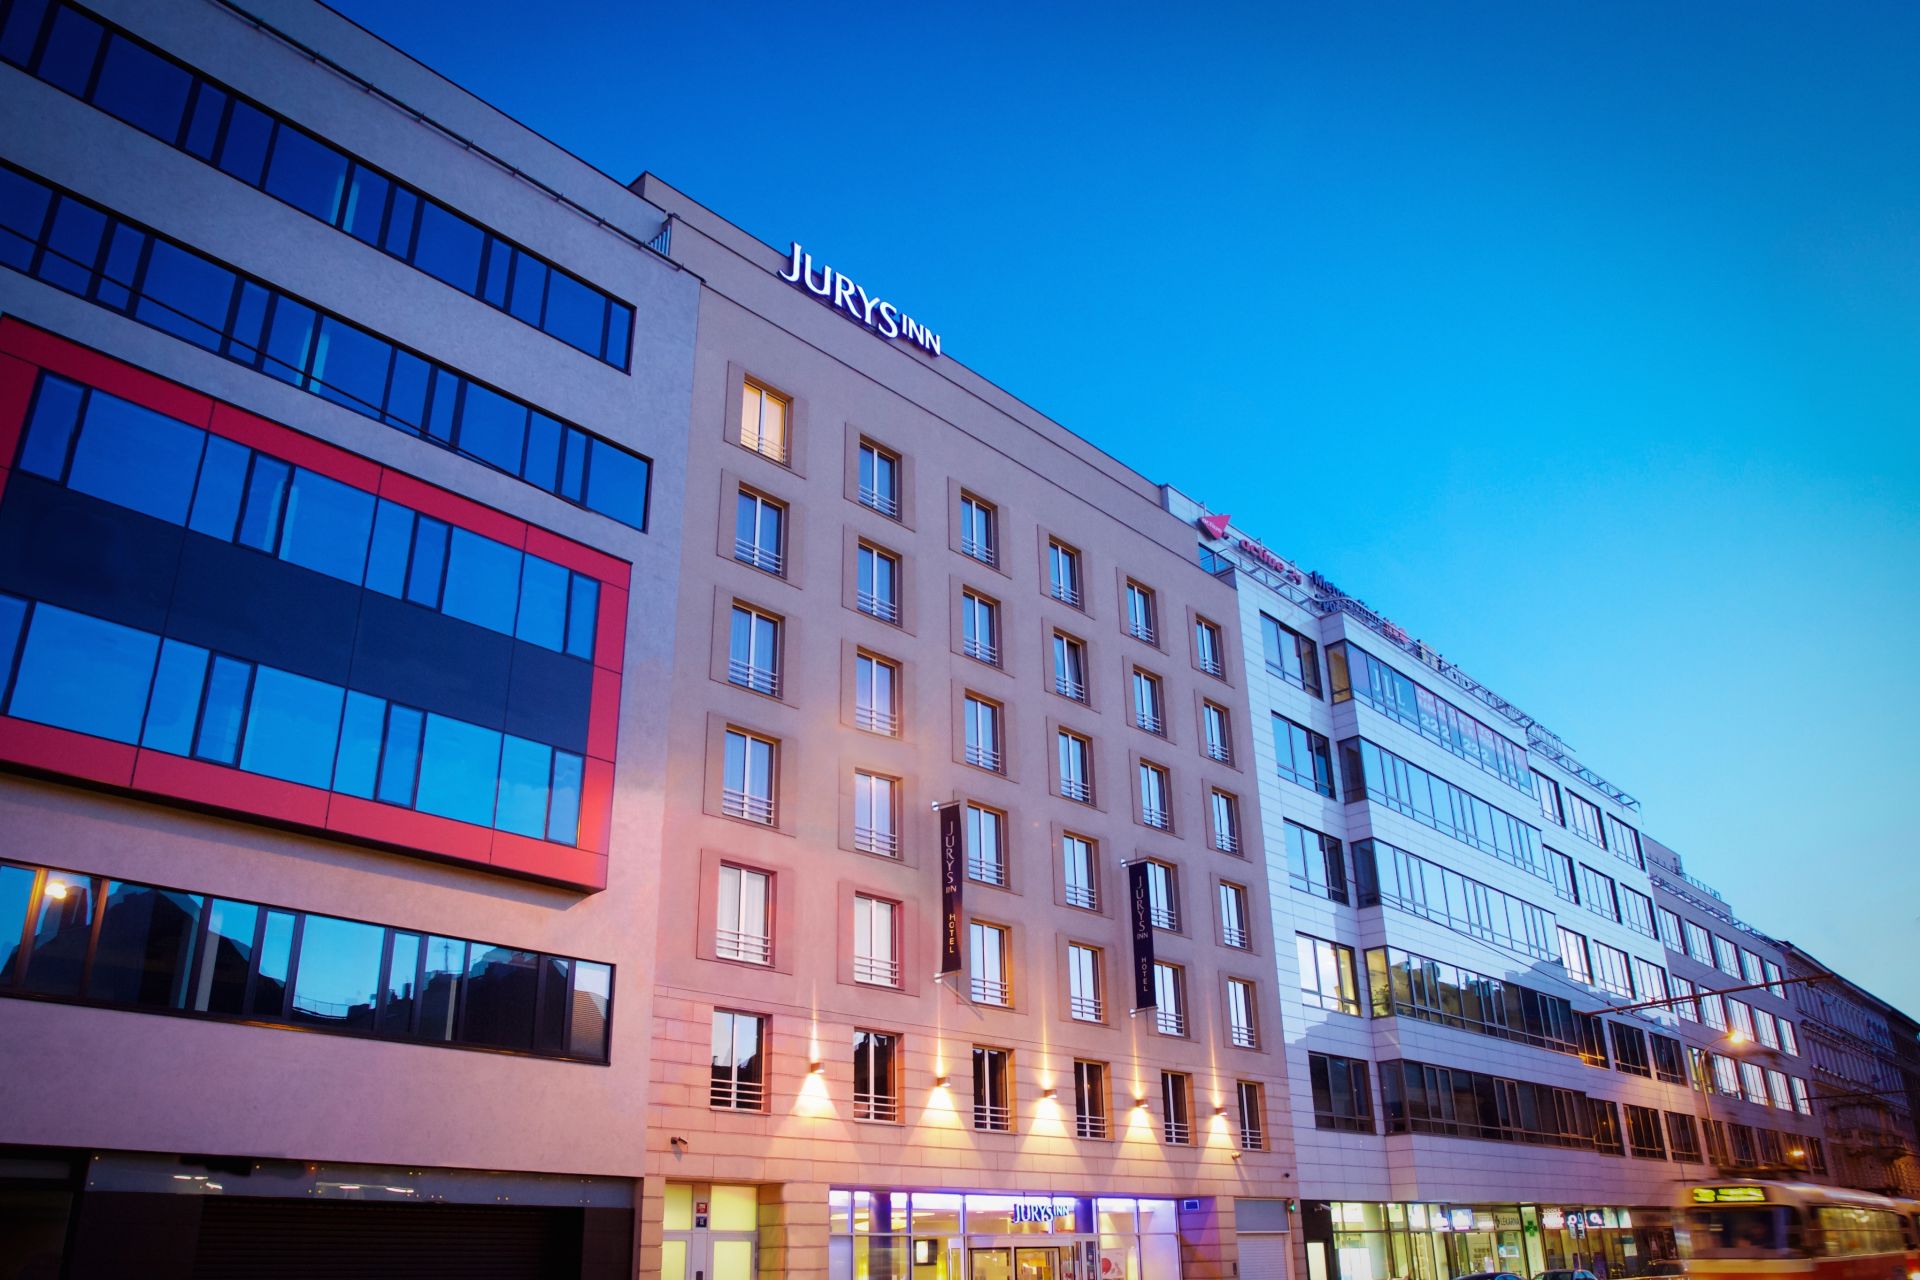 Hotel in Prague City Centre - Florenc :: Hotel Jurys Inn Prague